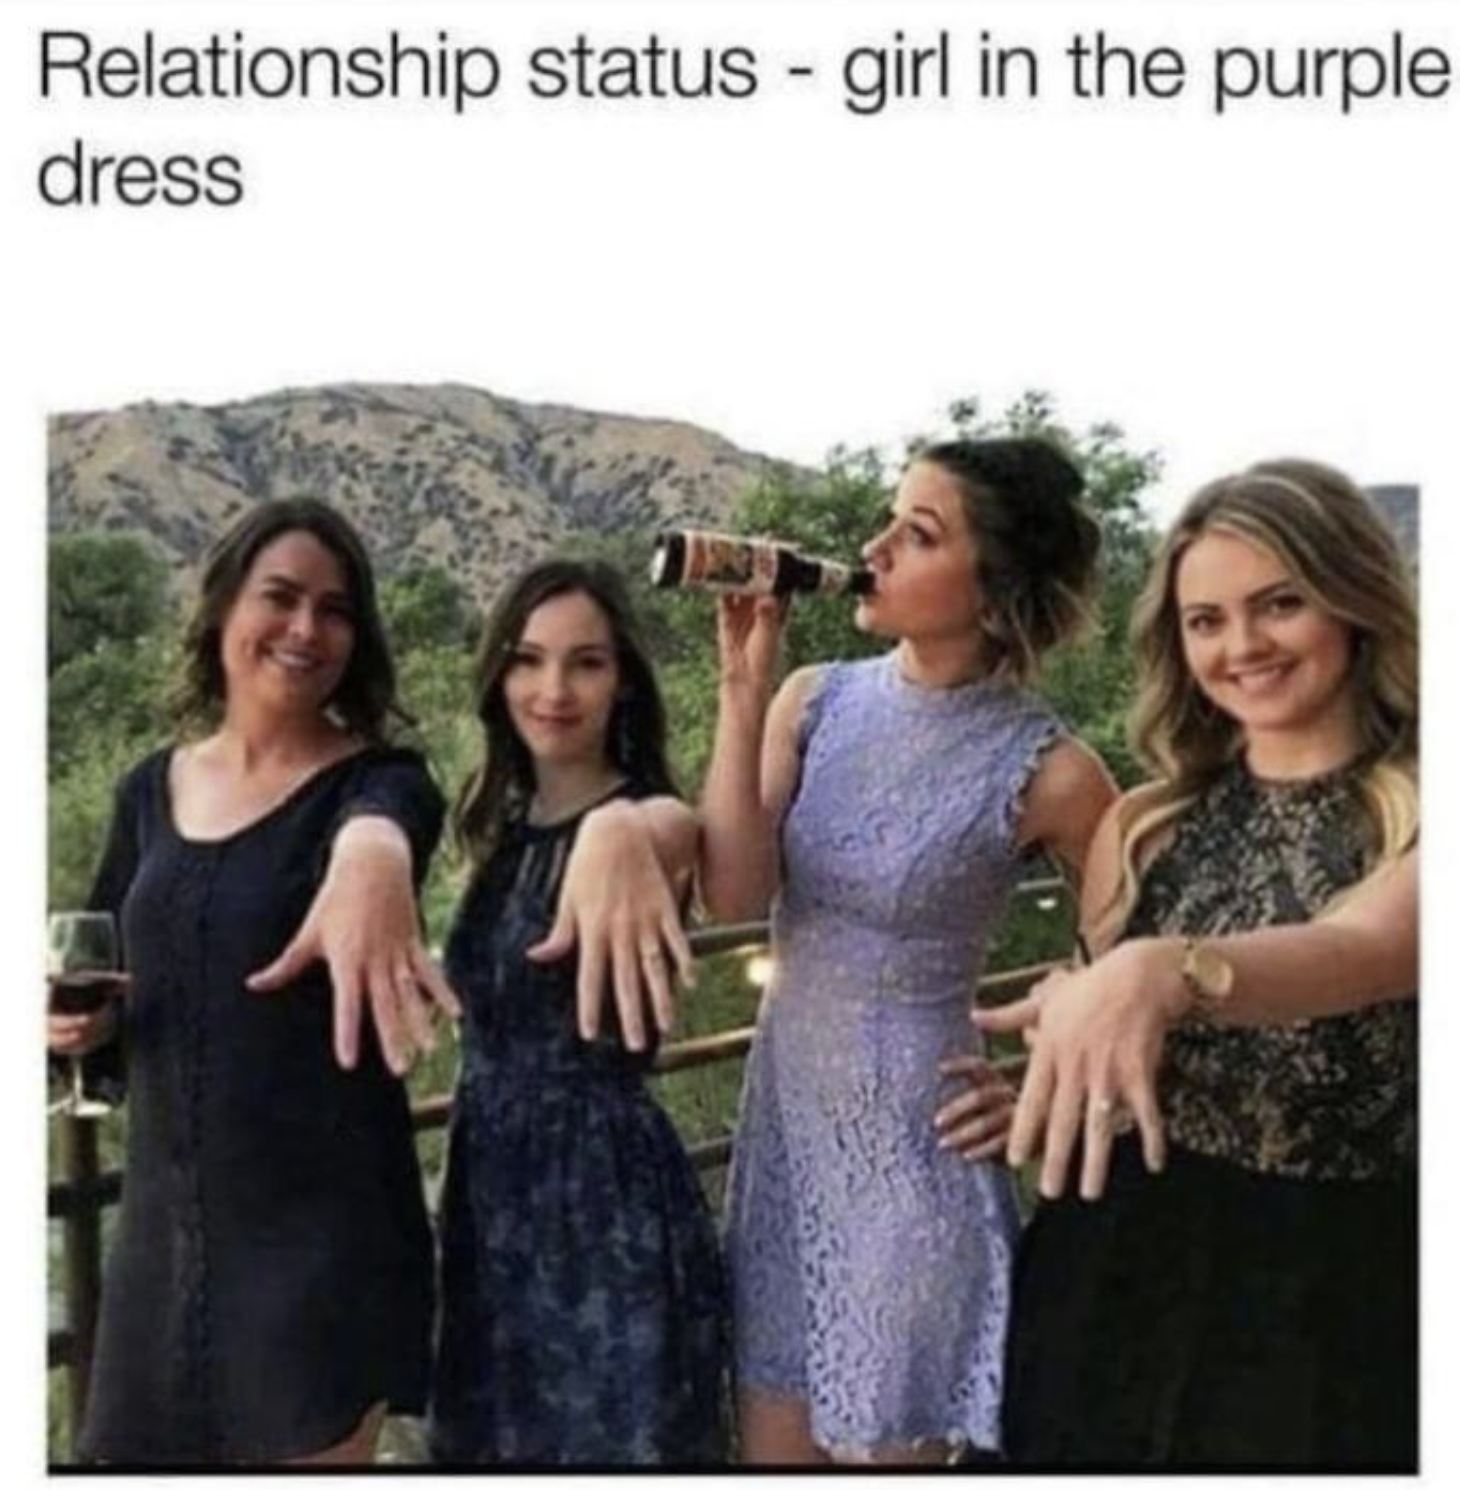 friendship - Relationship status girl in the purple dress